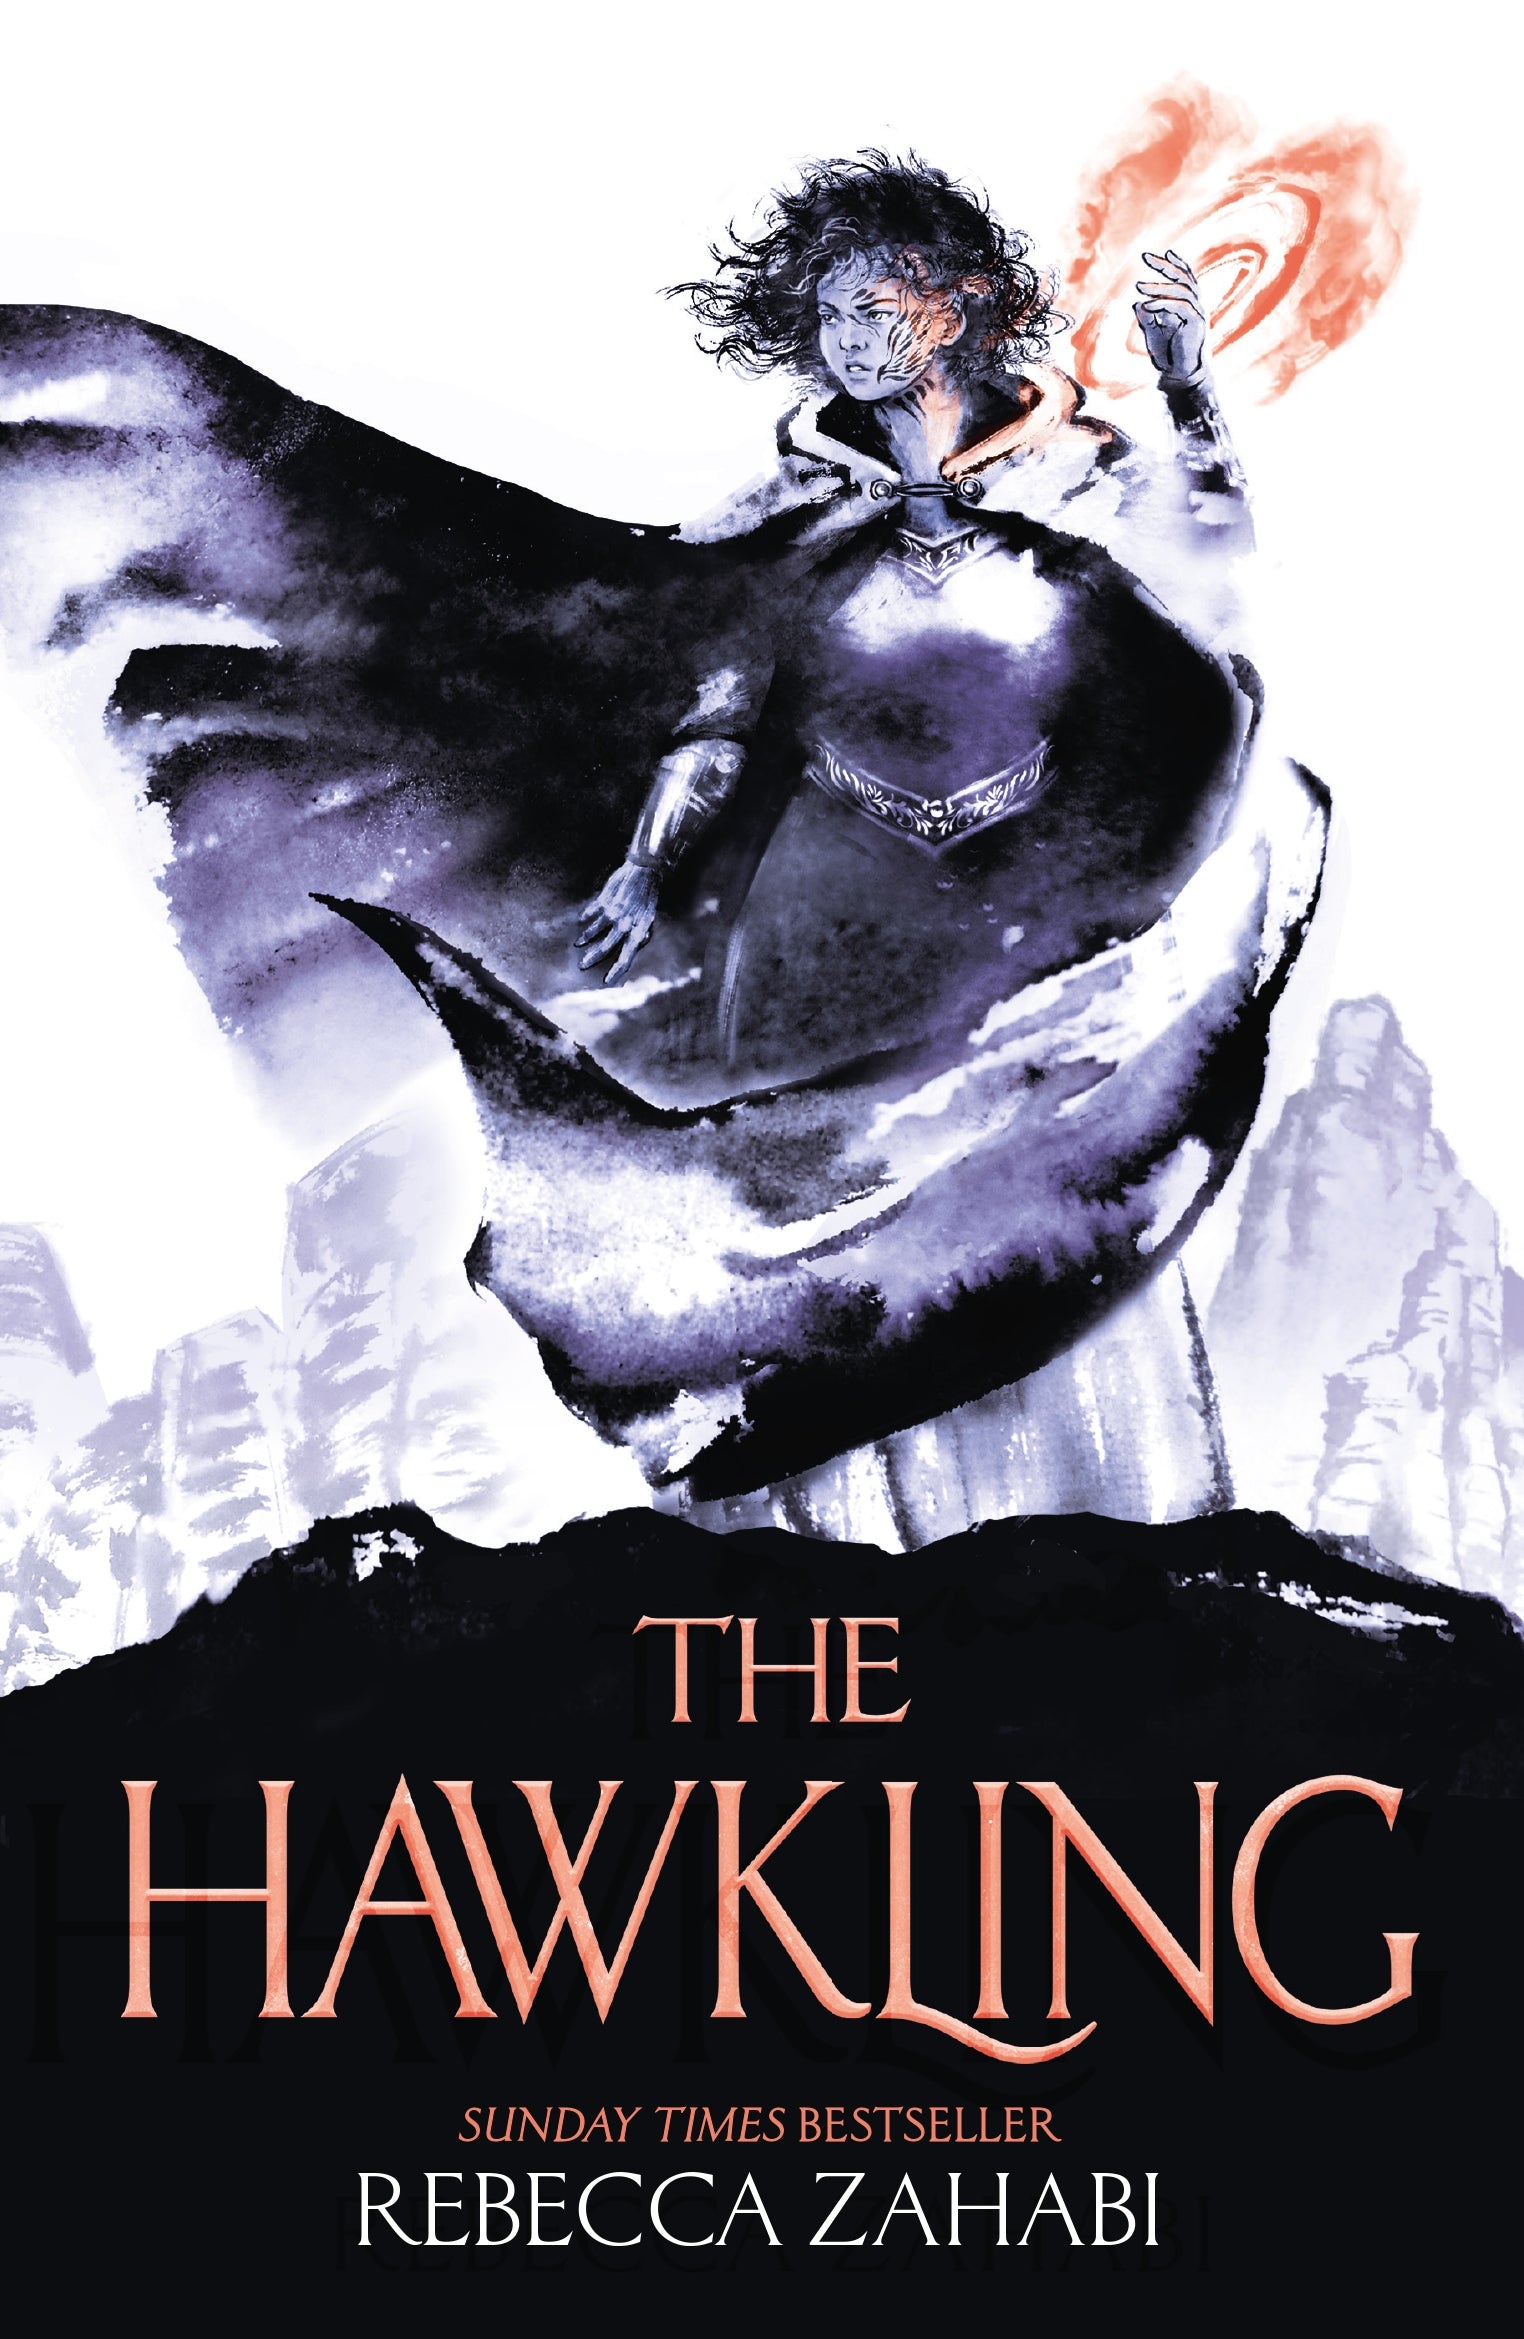 The Hawkling by Rebecca Zahabi